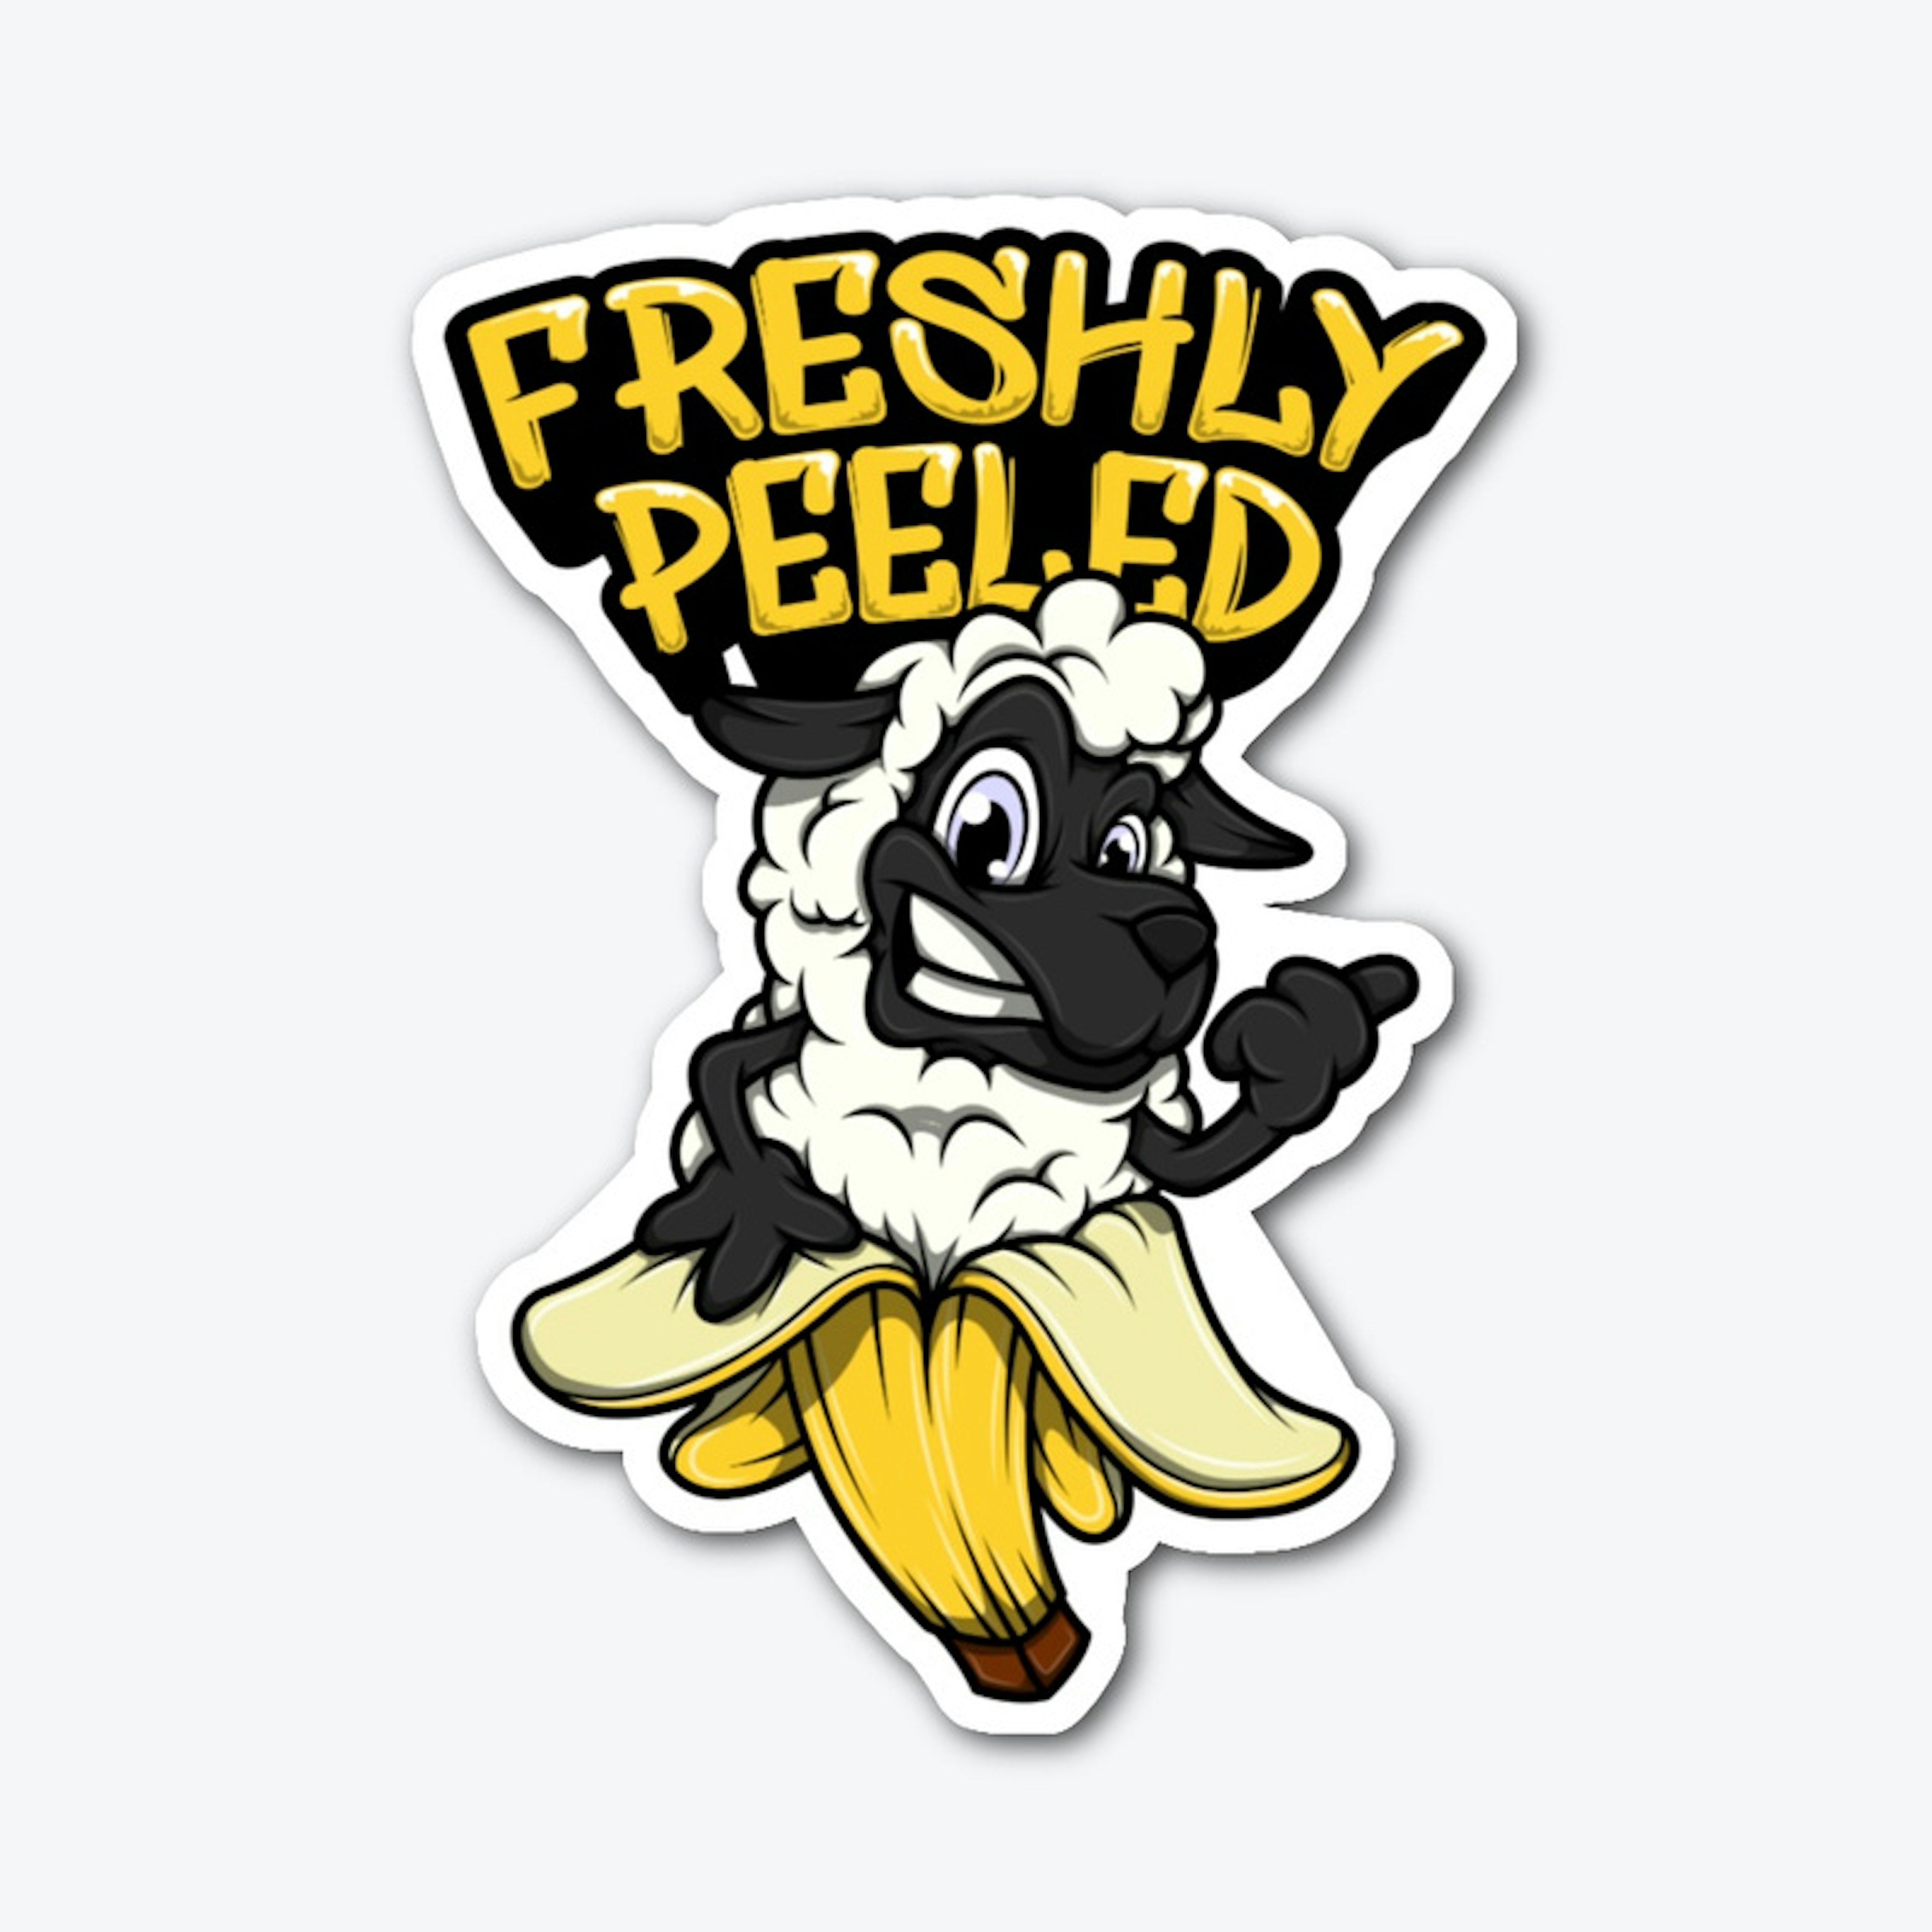 "Freshly Peeled" ™